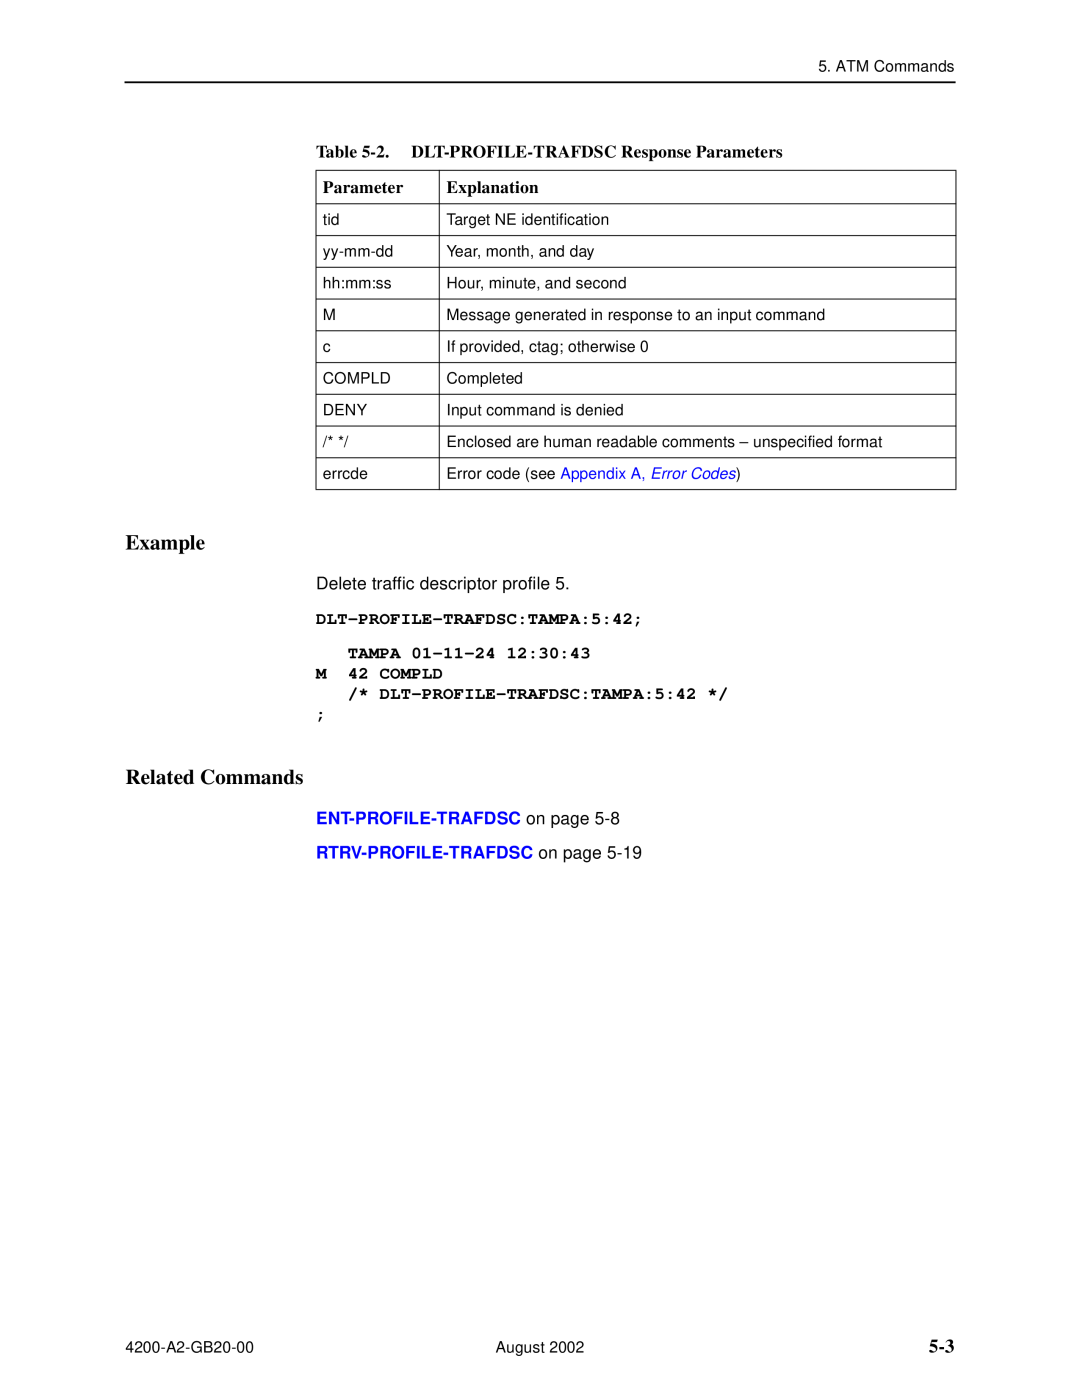 Paradyne 4200 2. DLT-PROFILE-TRAFDSC Response Parameters, DLT-PROFILE-TRAFDSCTAMPA542 TAMPA 01-11-24 M 42 COMPLD, Example 